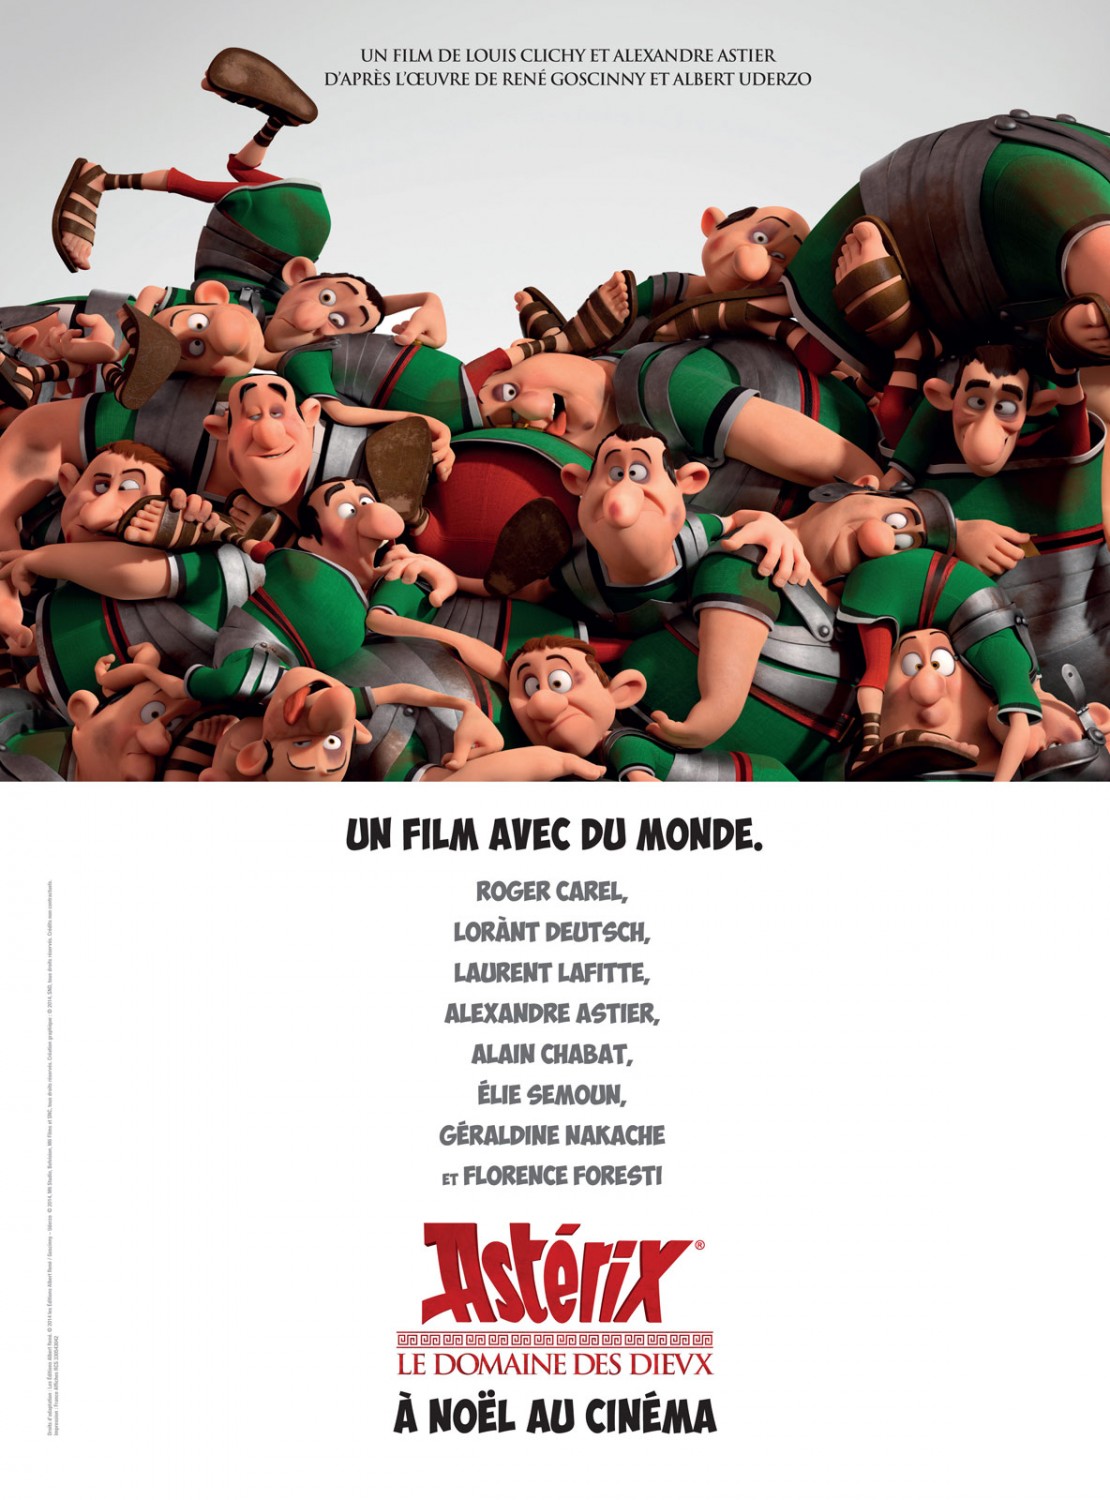 Extra Large Movie Poster Image for Astérix: Le domaine des dieux (#9 of 9)